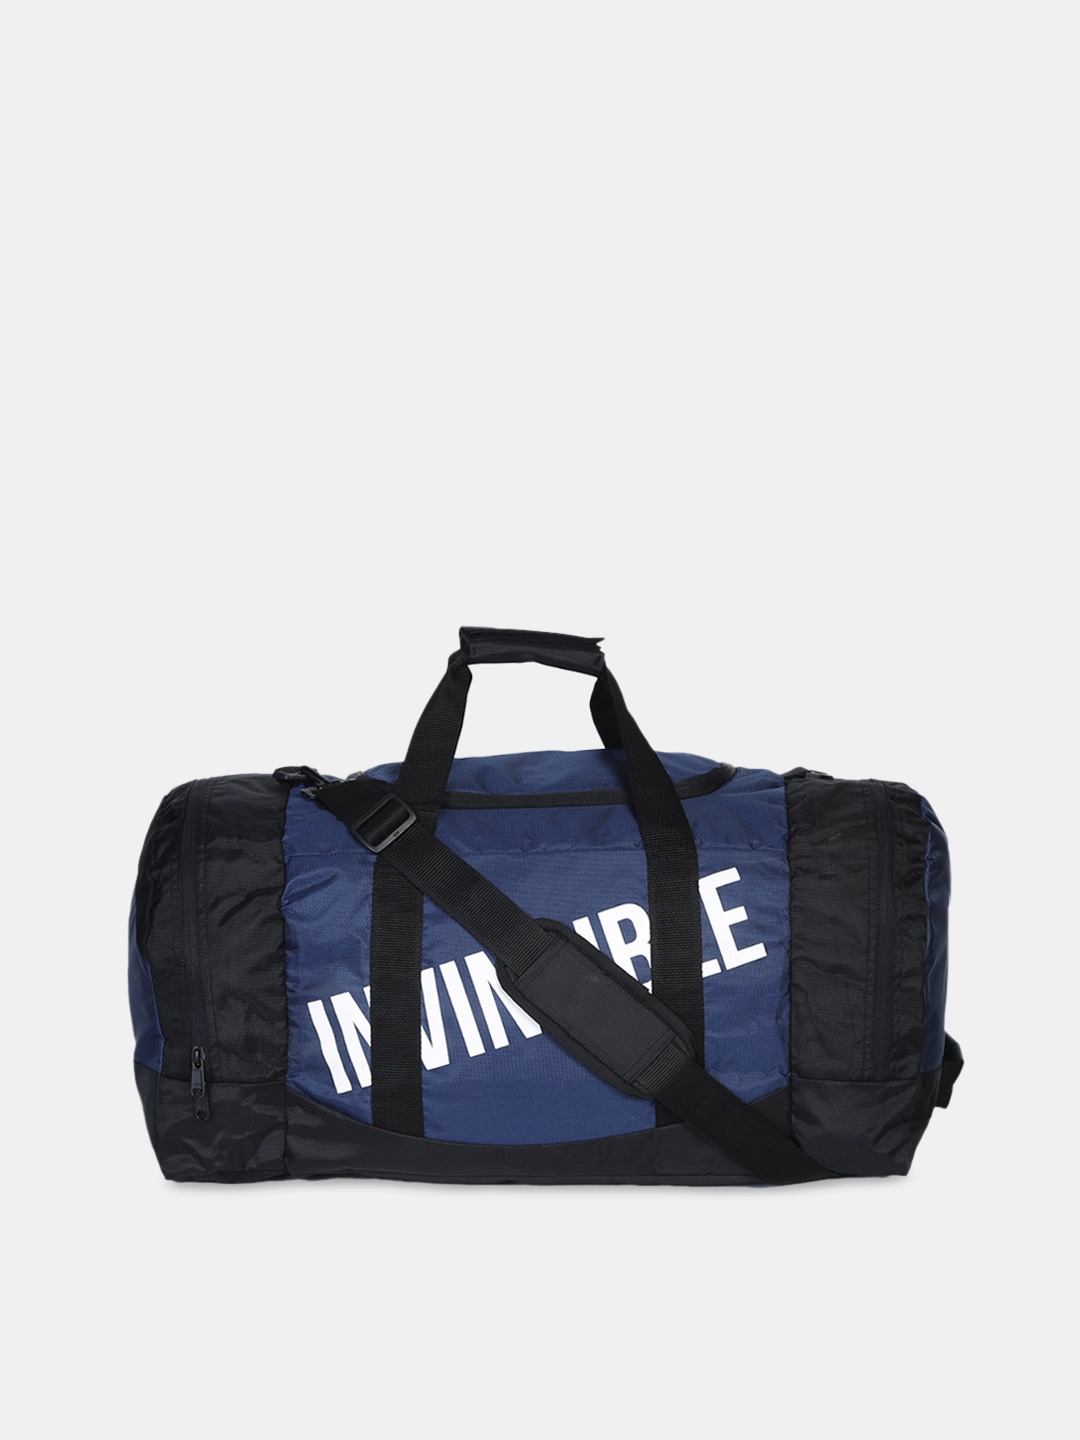 Accessories Duffel Bag | Invincible Navy Blue & Black Printed Duffel Bag - ZE56843